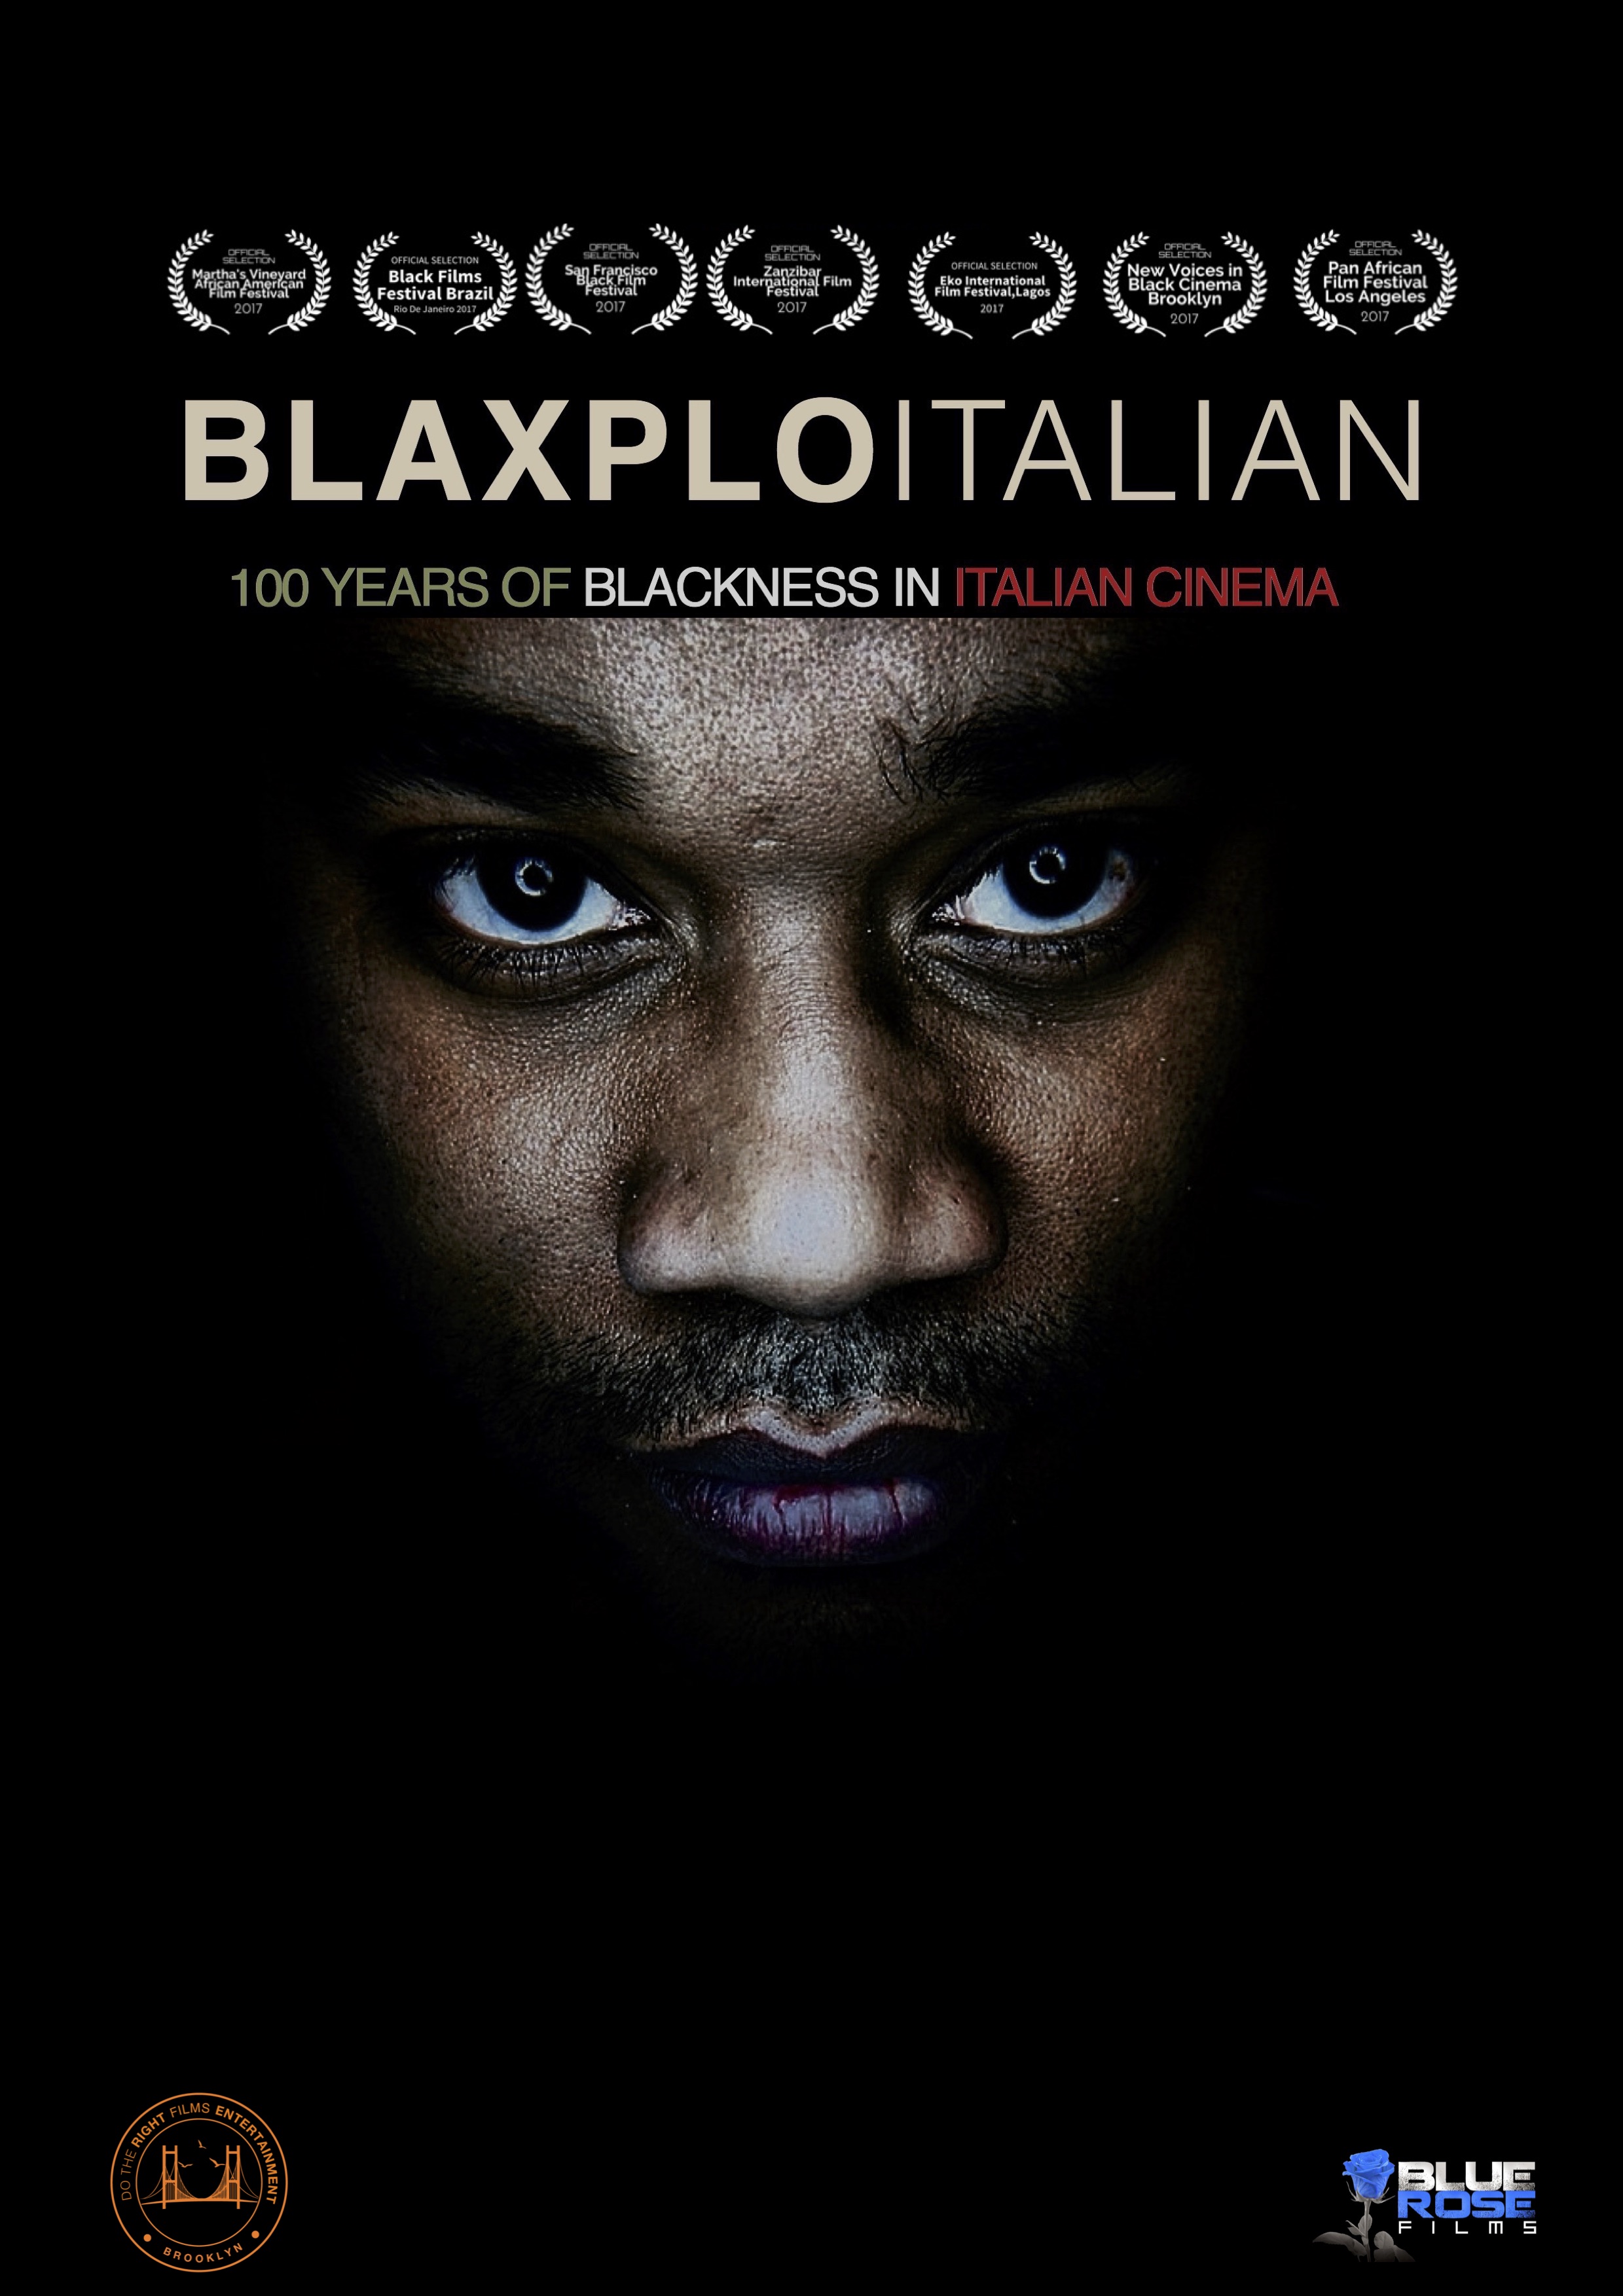 Deconstructing Race in Film: Fred Kuwornu's Documentary Blaxploitalian 100 Years of Blackness